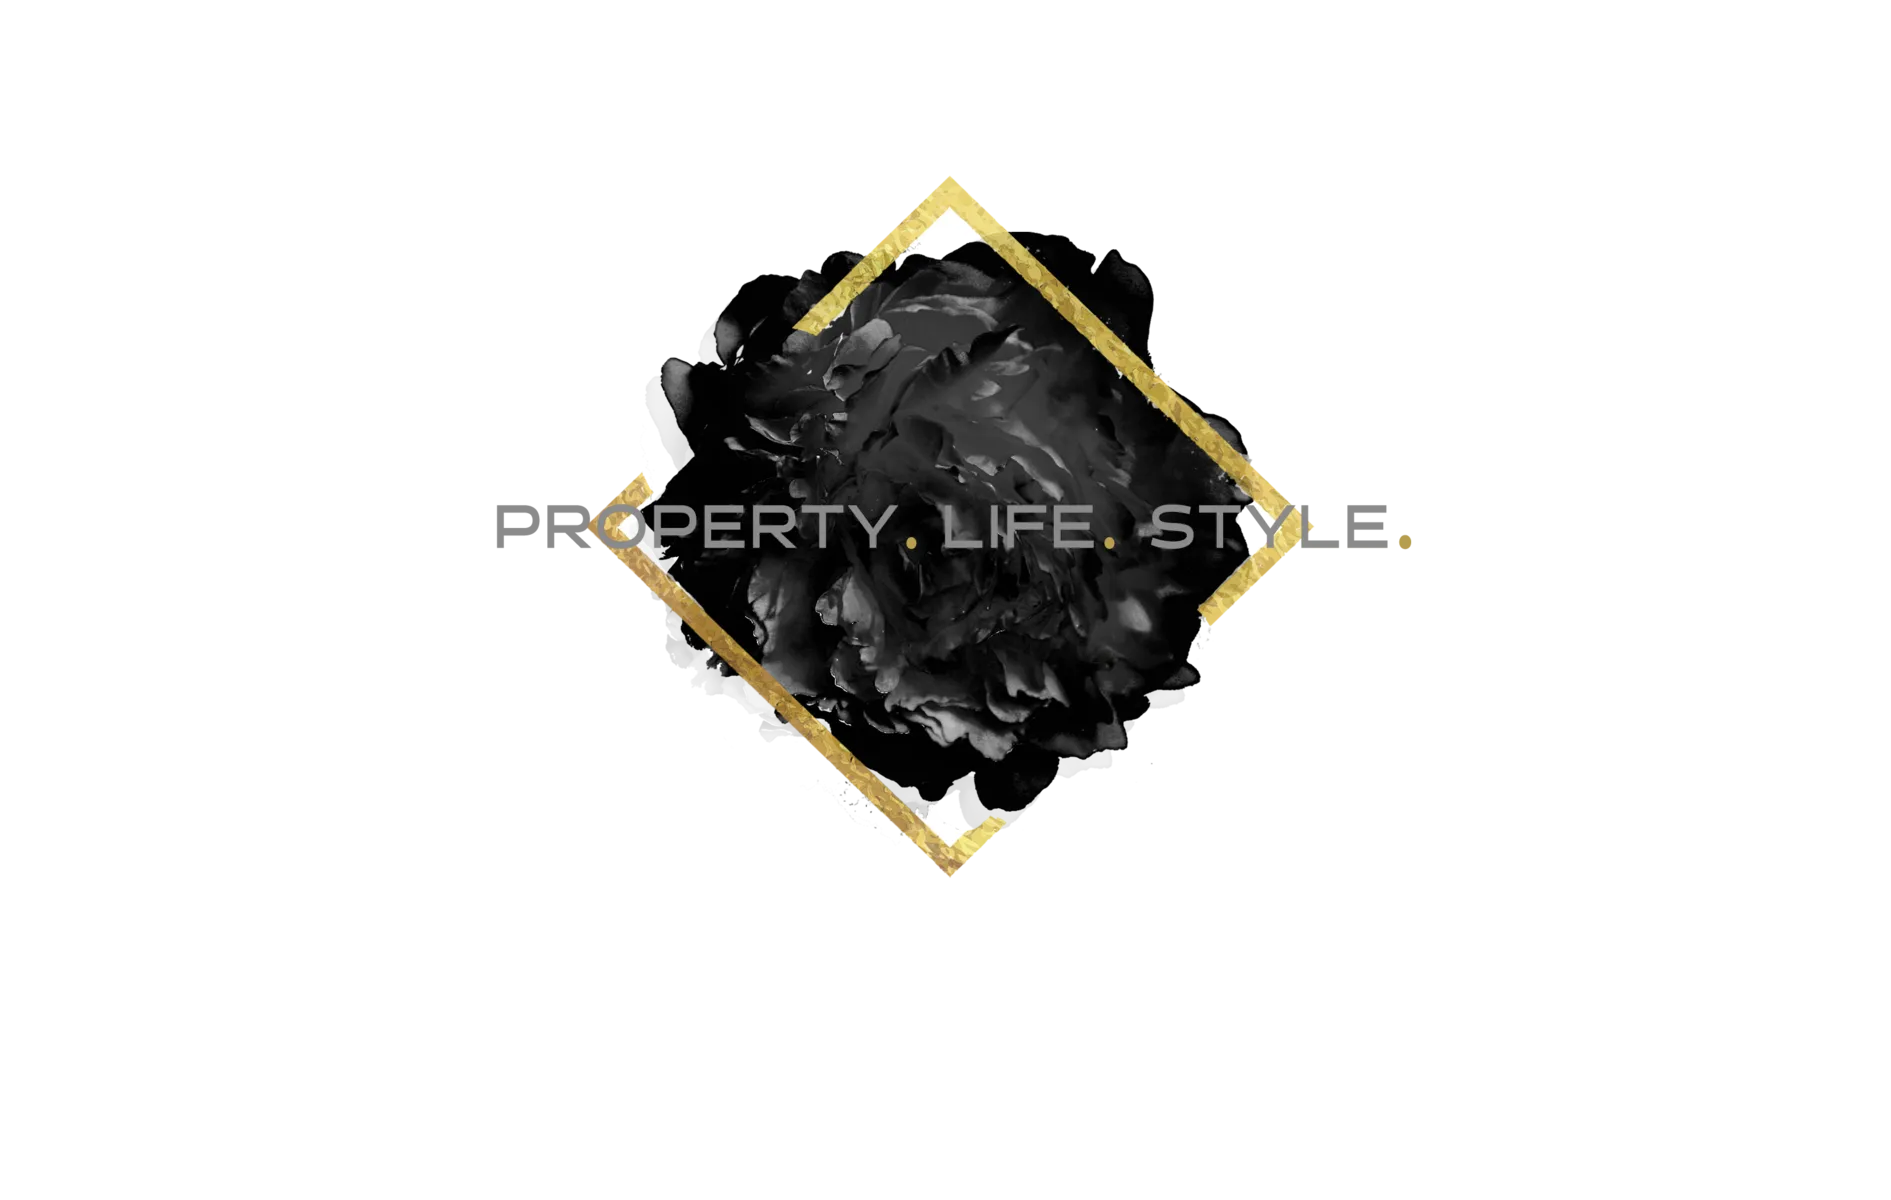 the Property LifeStylist